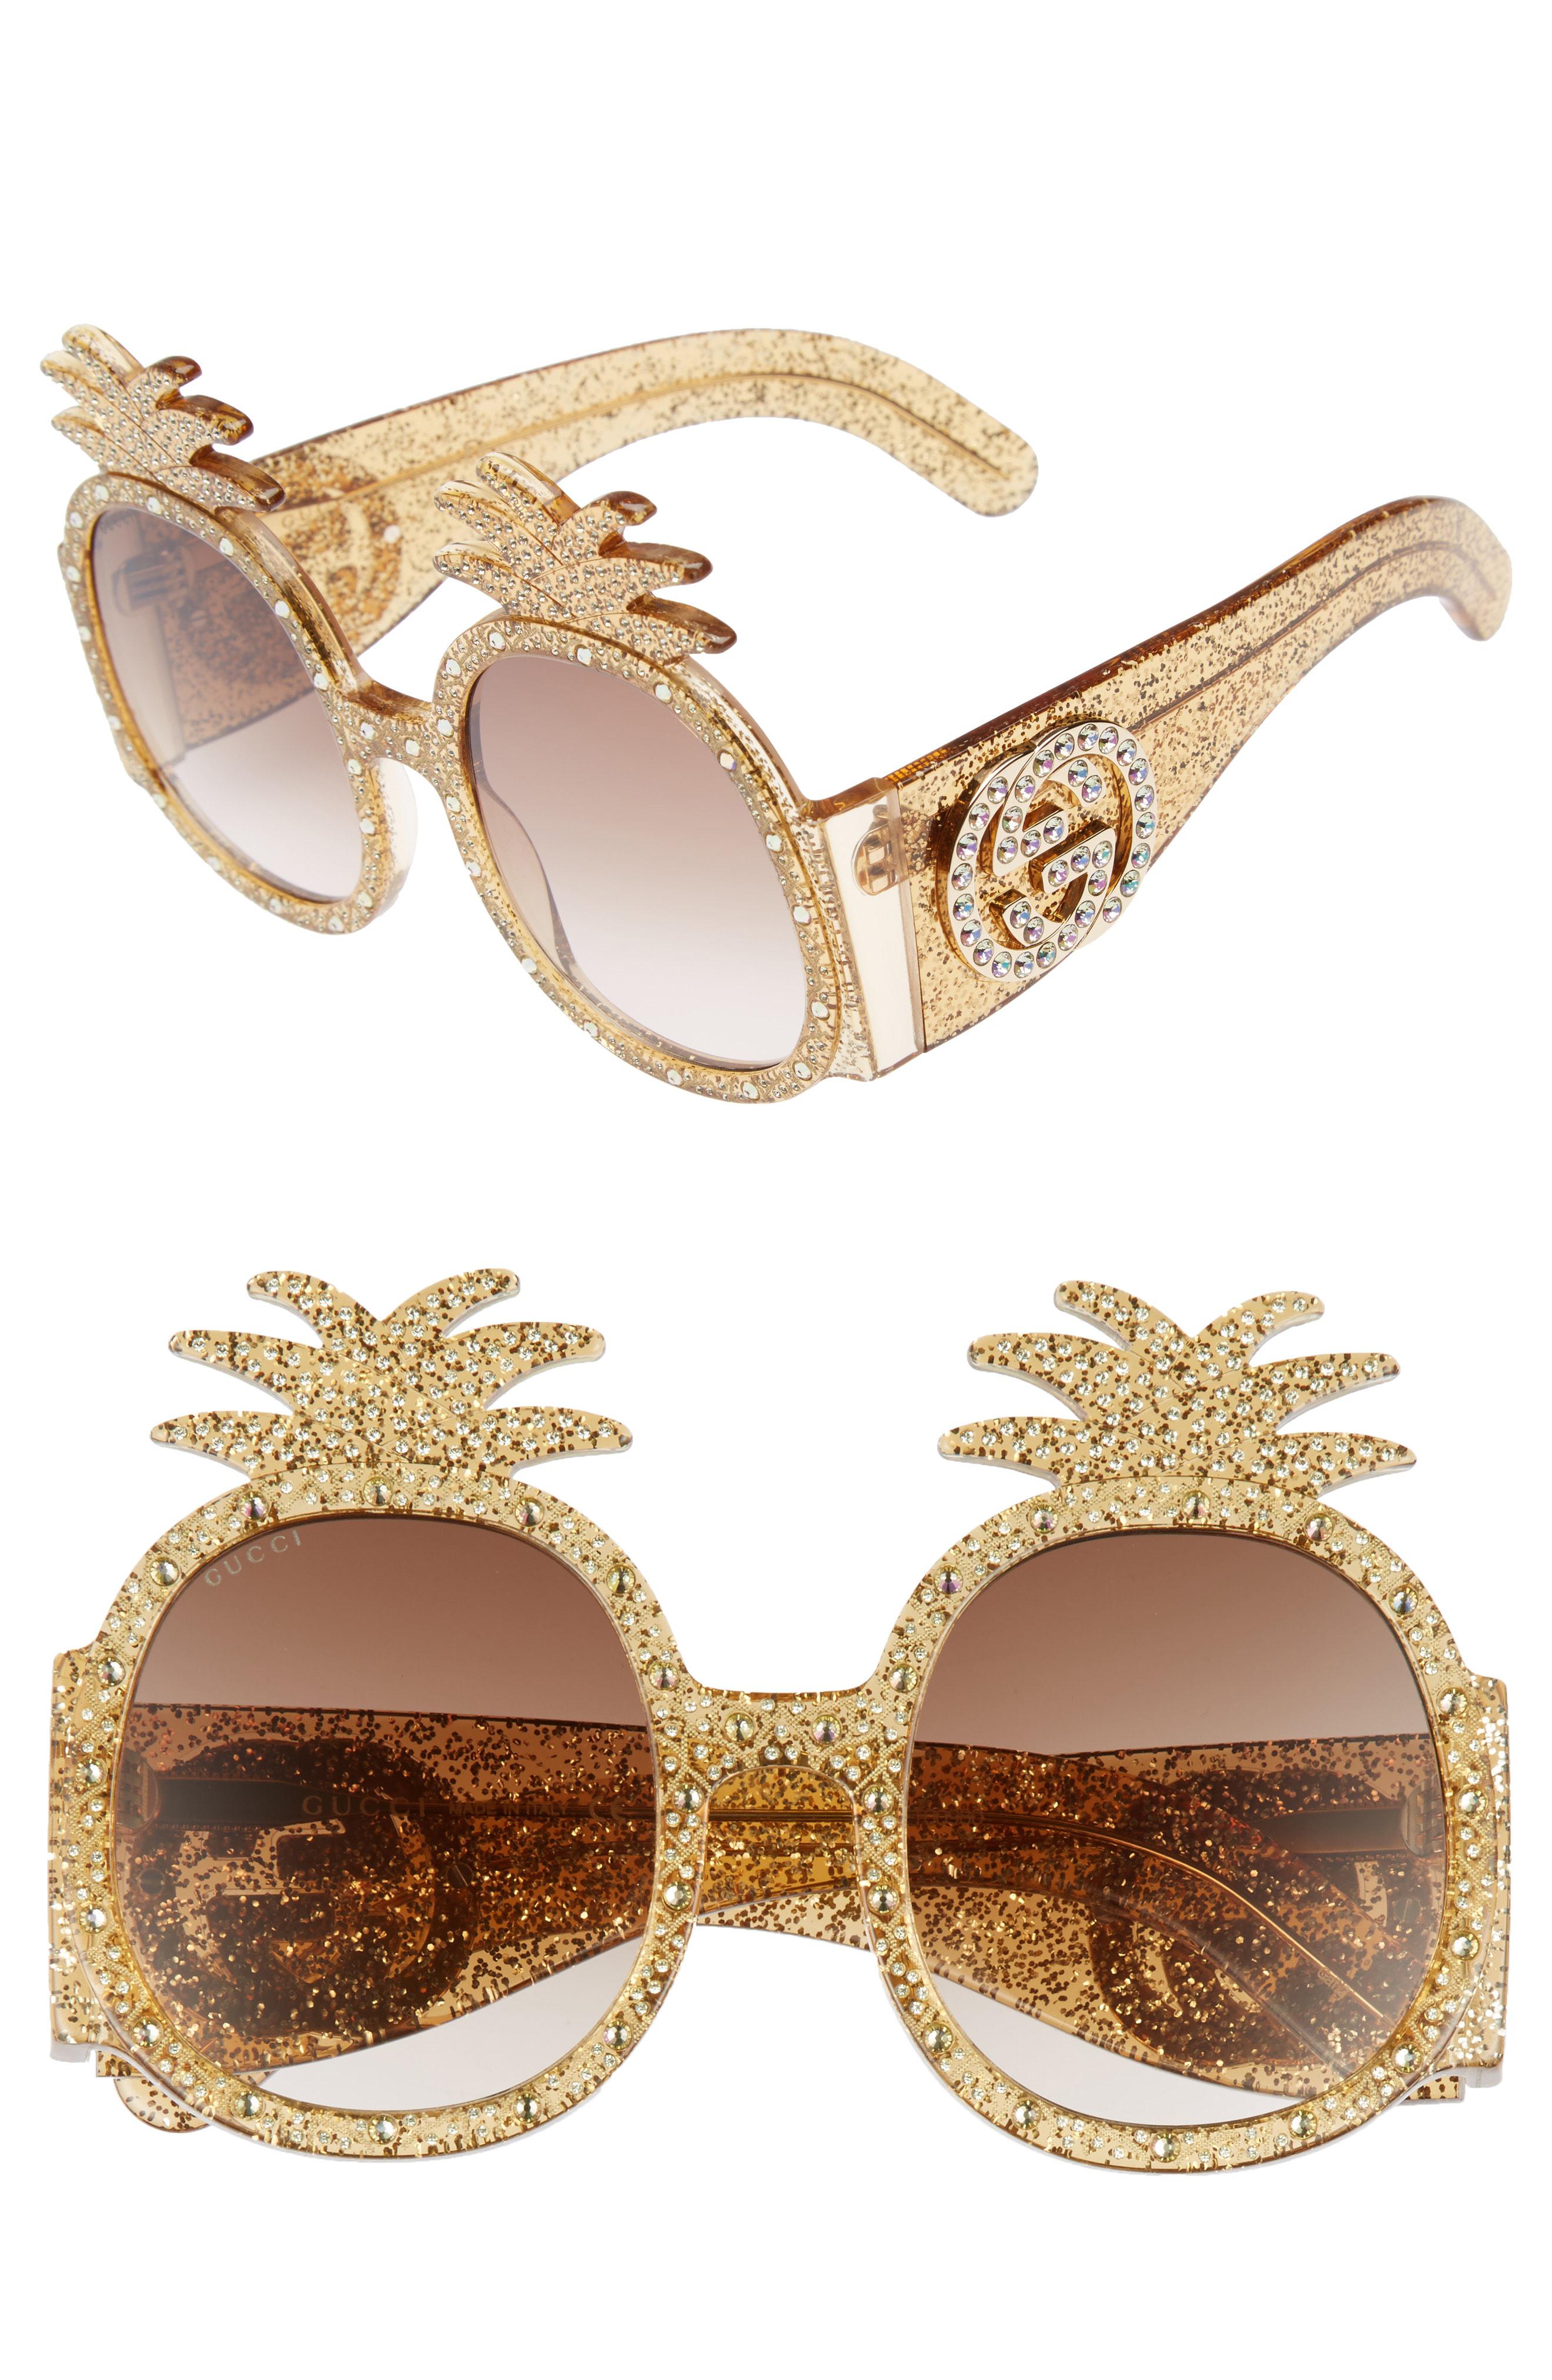 Gucci 53mm Pineapple Sunglasses - in 